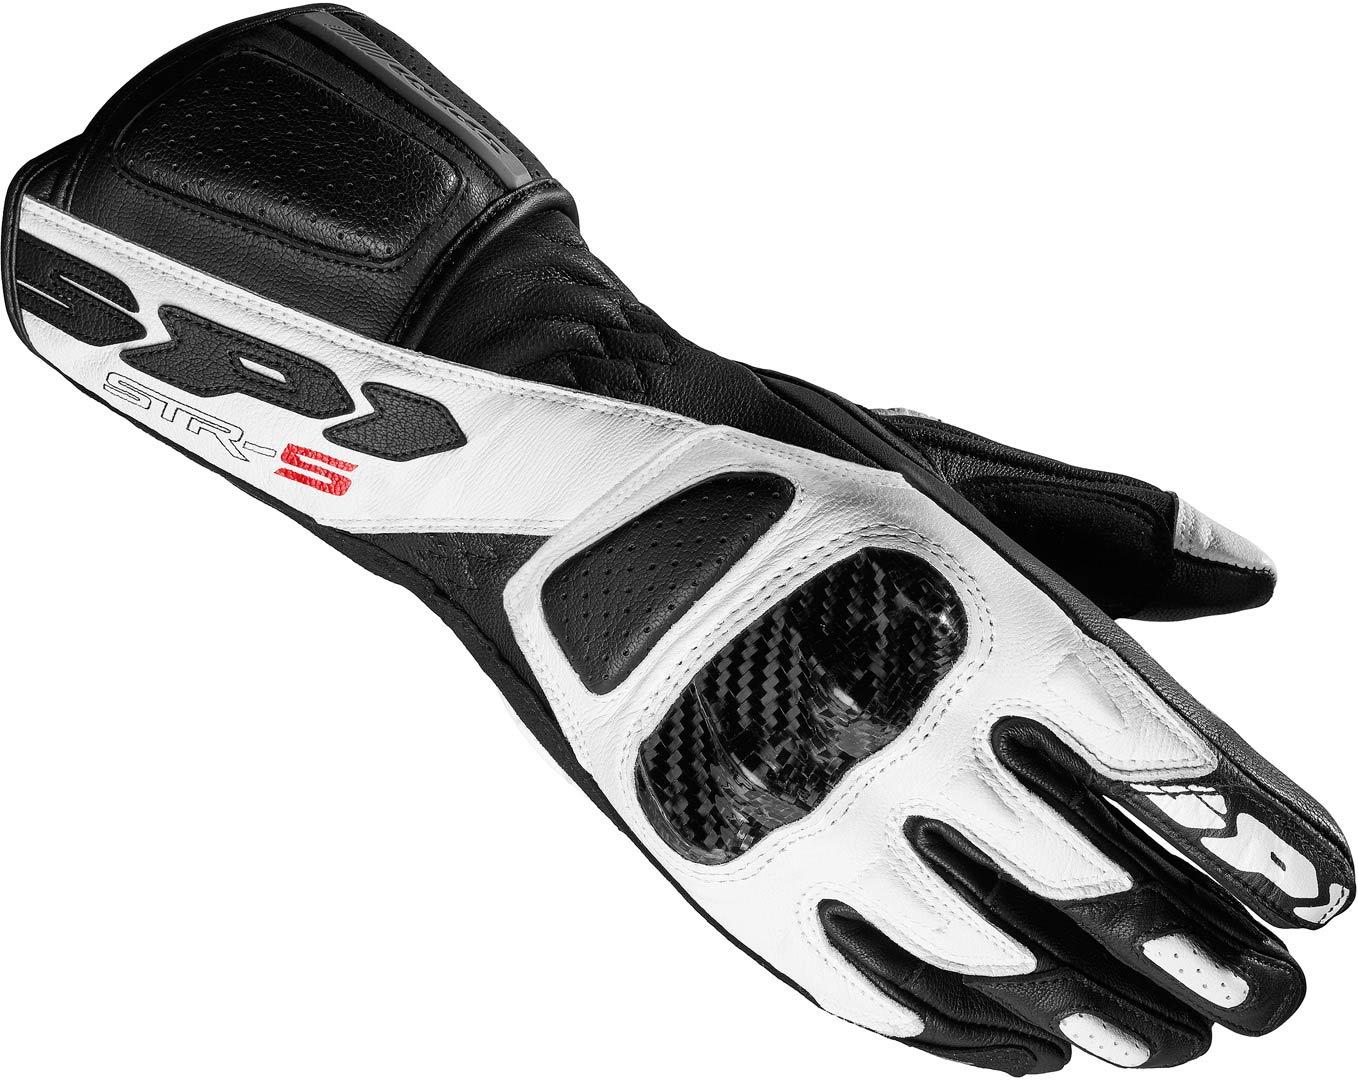 Spidi STR-5 Ladies Motorcycle Gloves, black-white, Size S for Women, black-white, Size S for Women